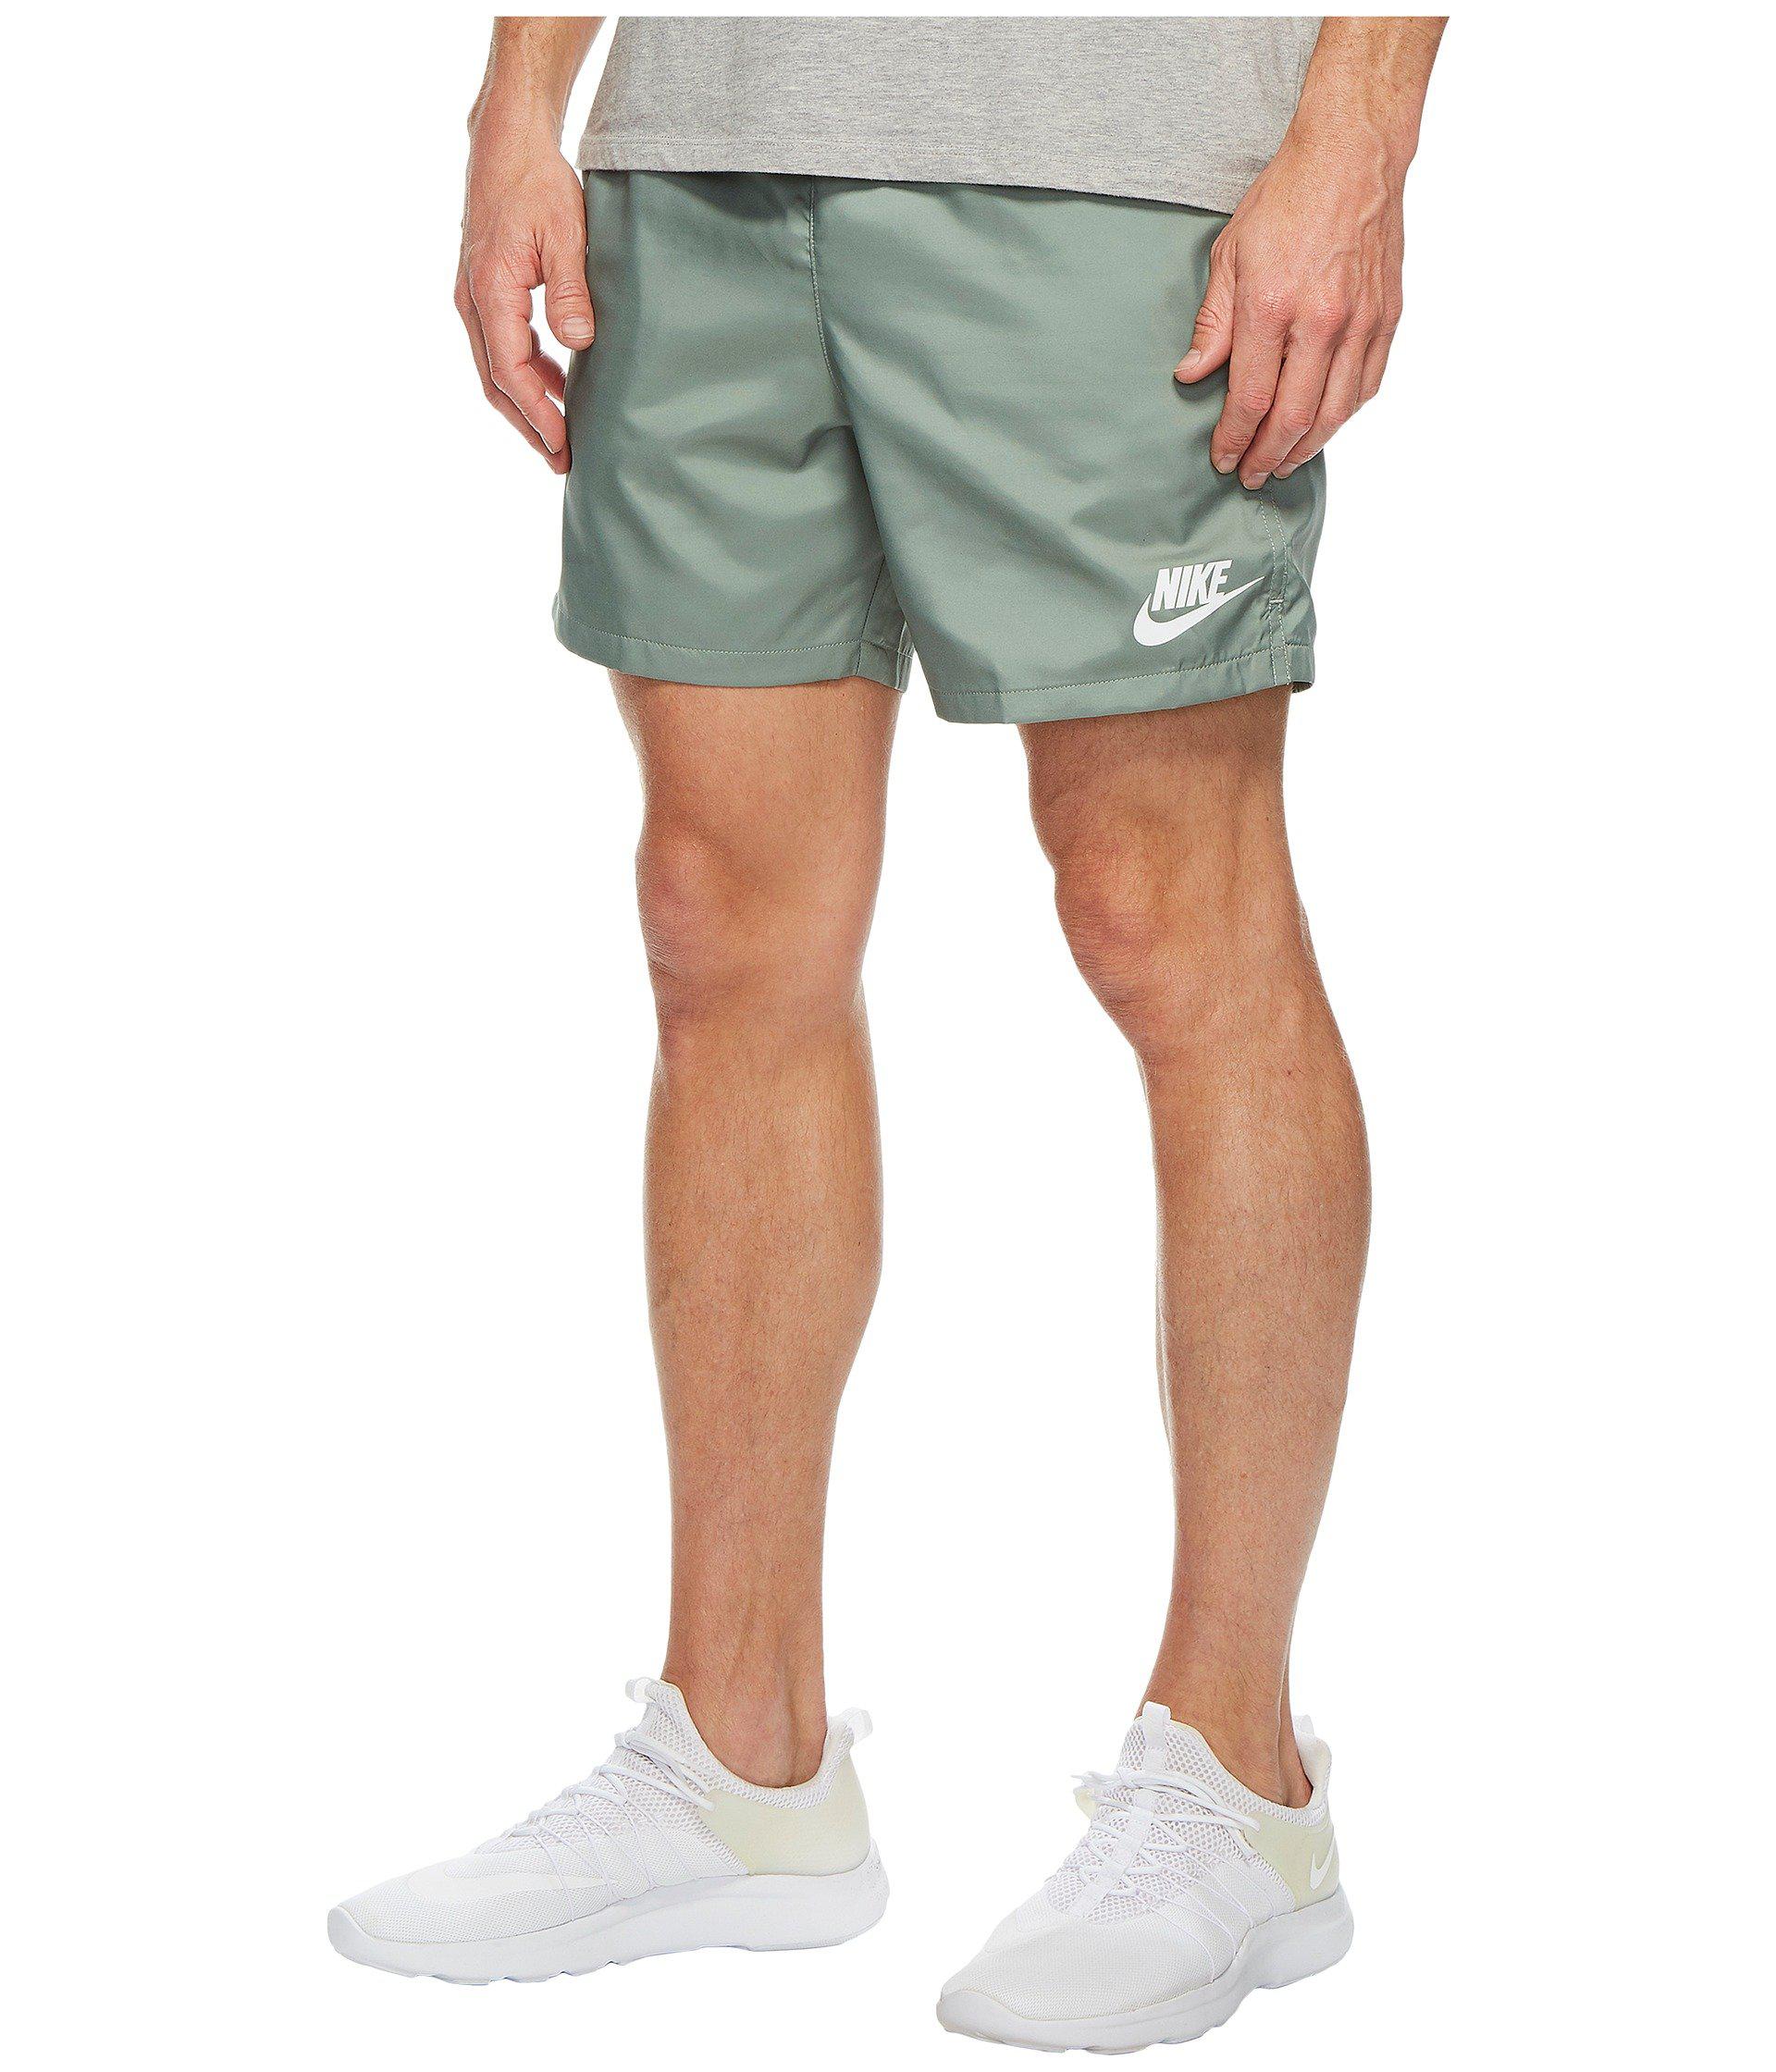 nike flow shorts green